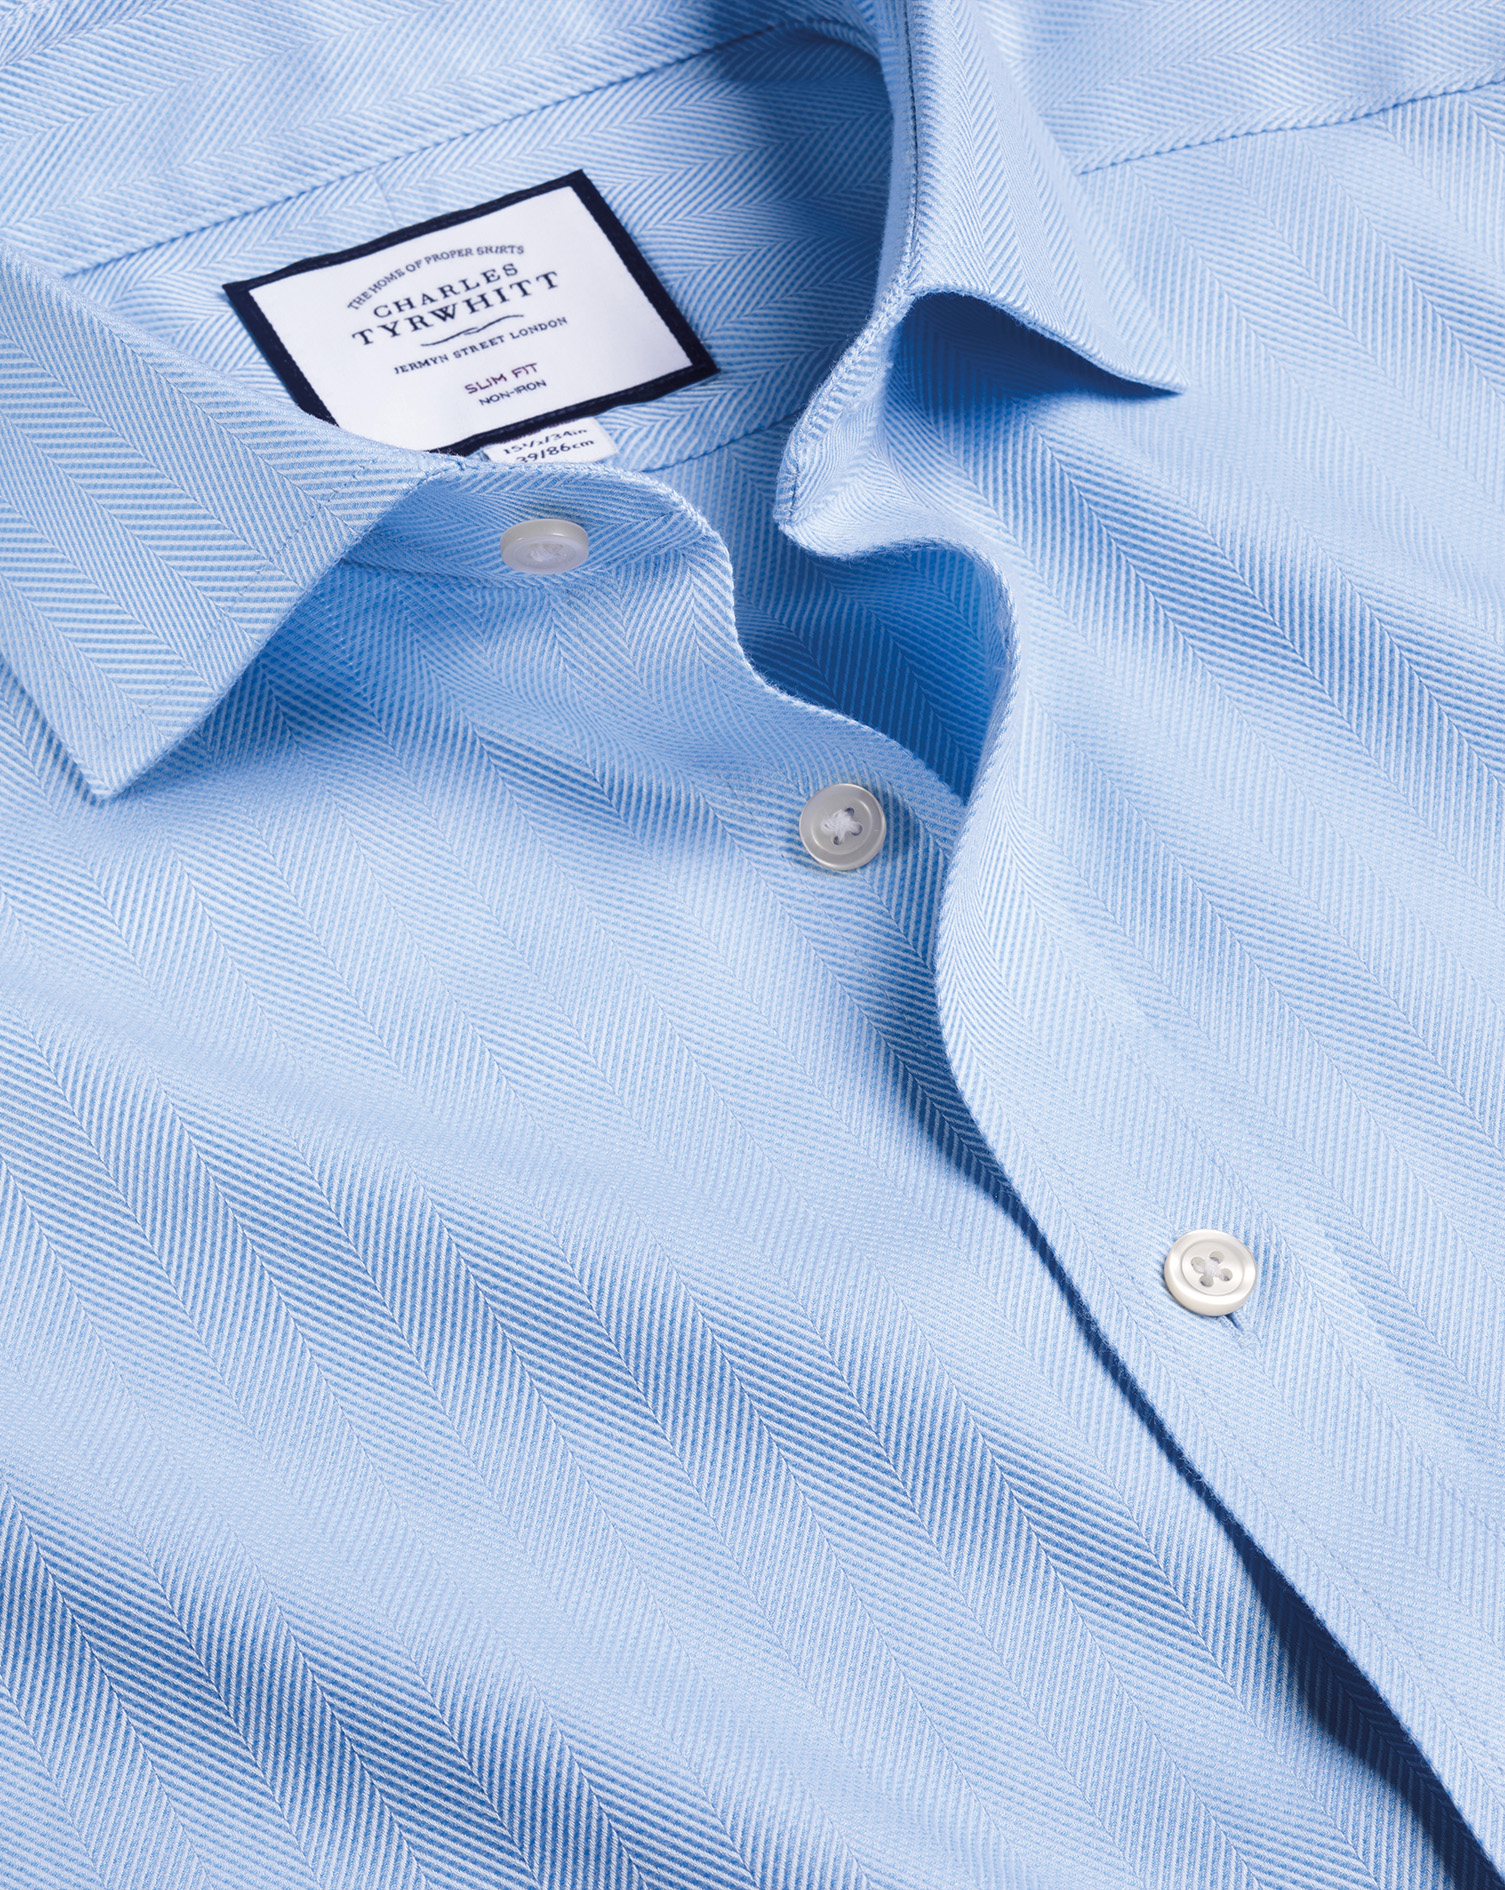 Men's Charles Tyrwhitt Cutaway Collar Non-Iron Herringbone Dress Shirt - Sky Blue French Cuff Size X